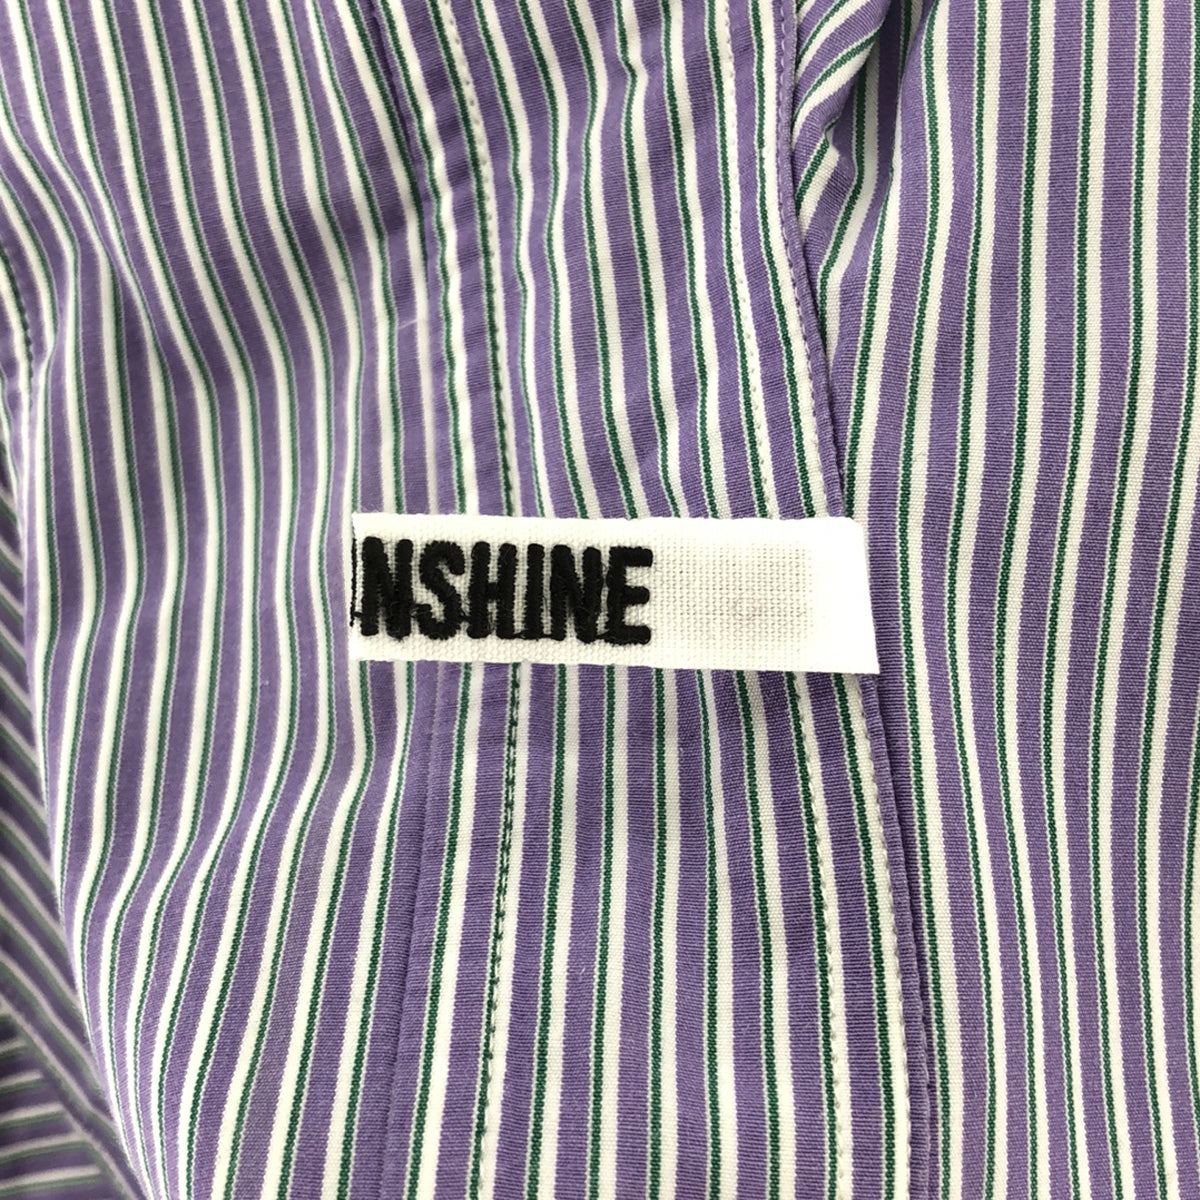 Kaptain Sunshine / キャプテンサンシャイン | 2023AW | Cotton Semi Spread Collar Shirt ストライプ コットン セミスプレッドカラーシャツ | 38 | メンズ